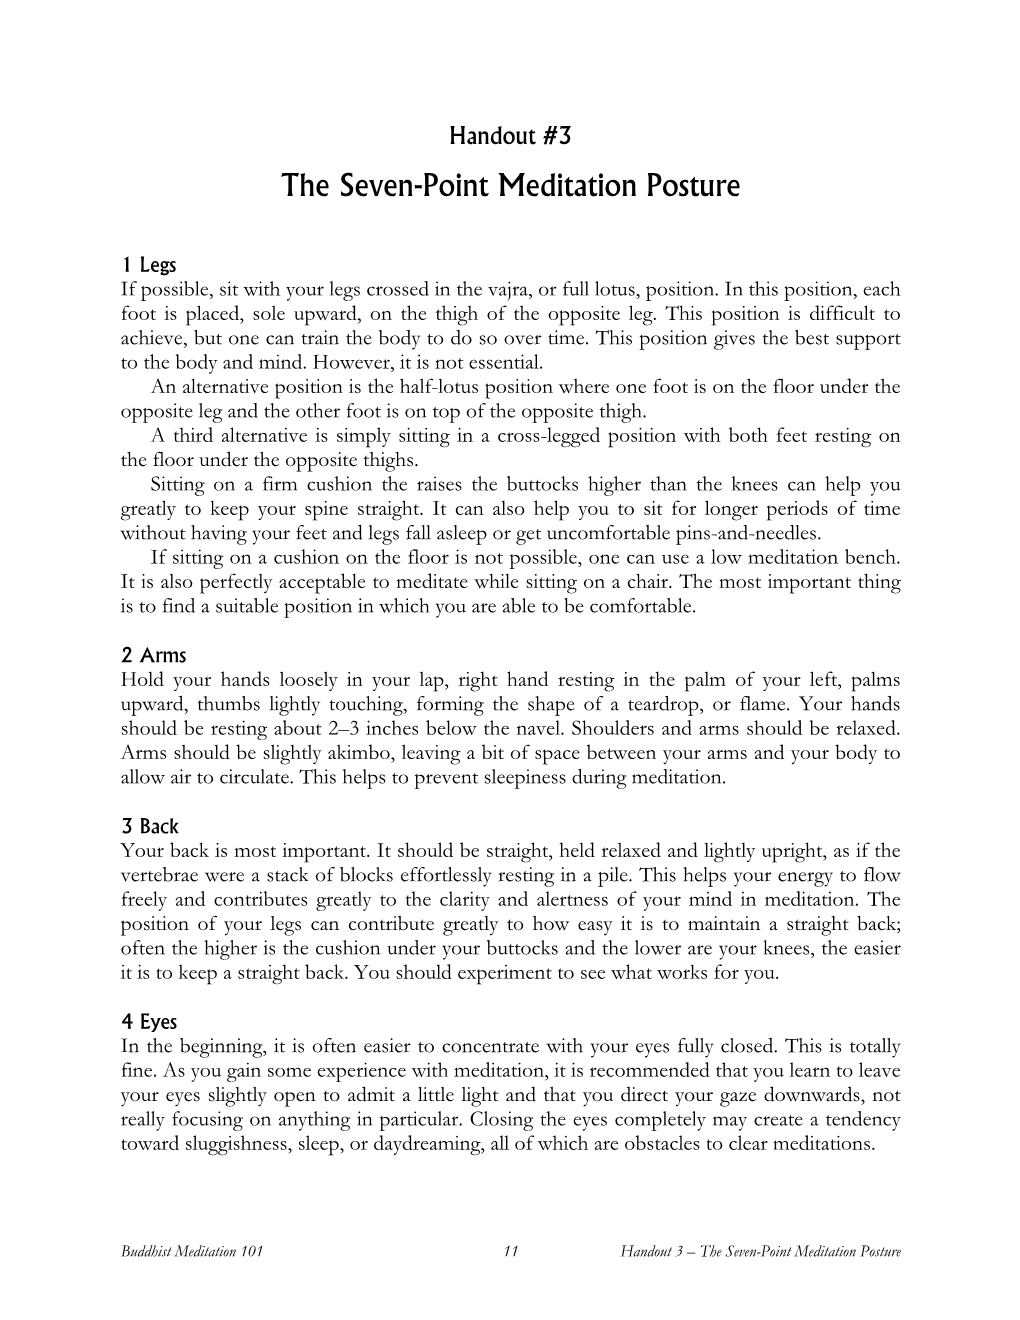 The Seven-Point Meditation Posture